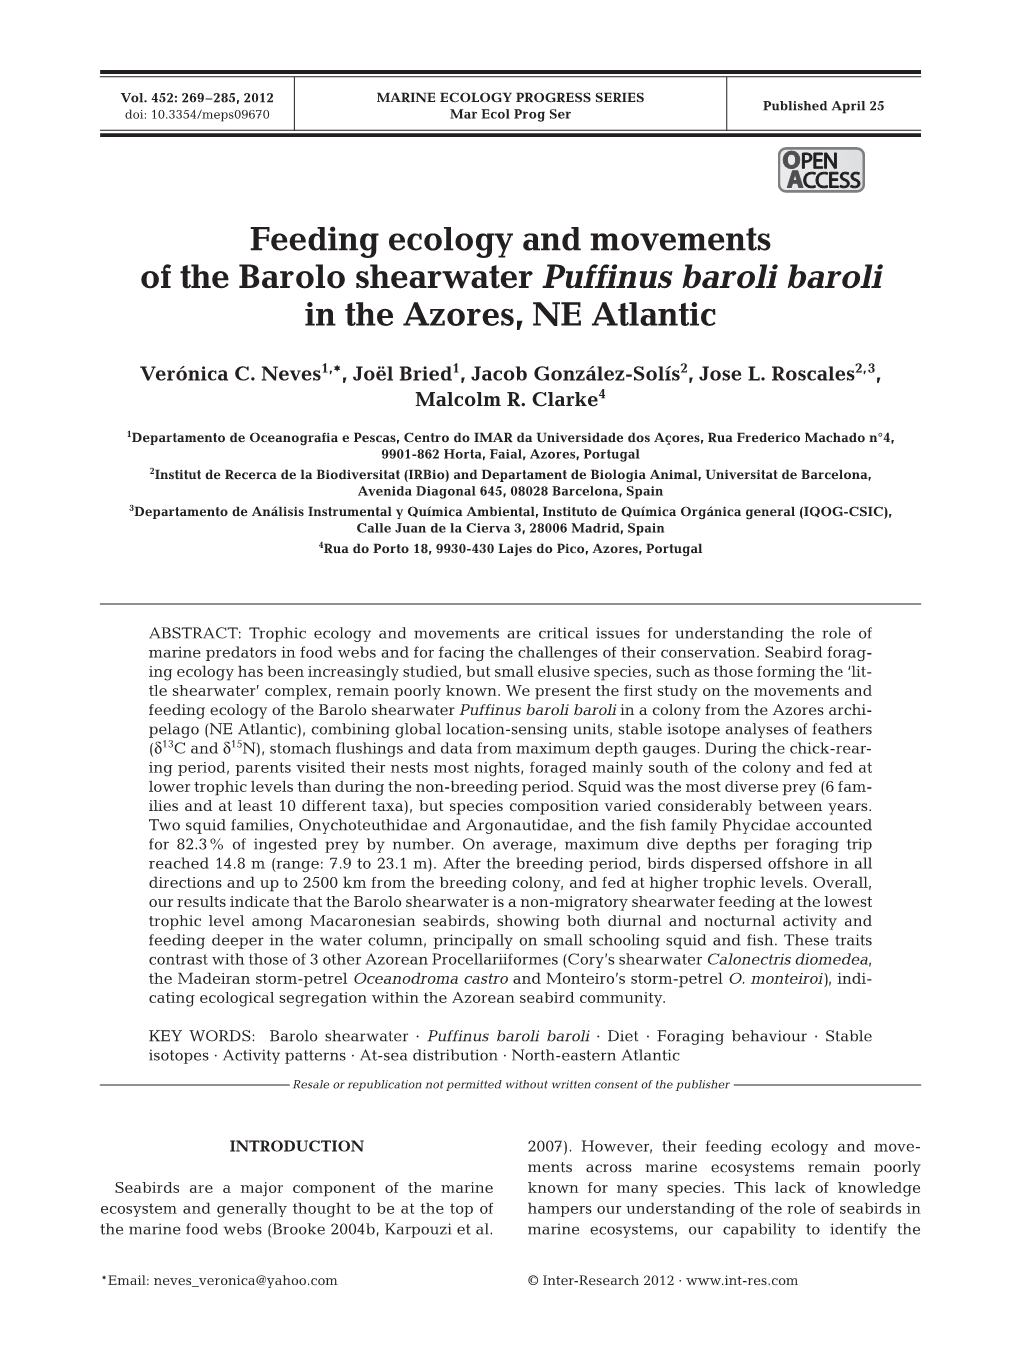 Feeding Ecology and Movements of the Barolo Shearwater Puffinus Baroli Baroli in the Azores, NE Atlantic